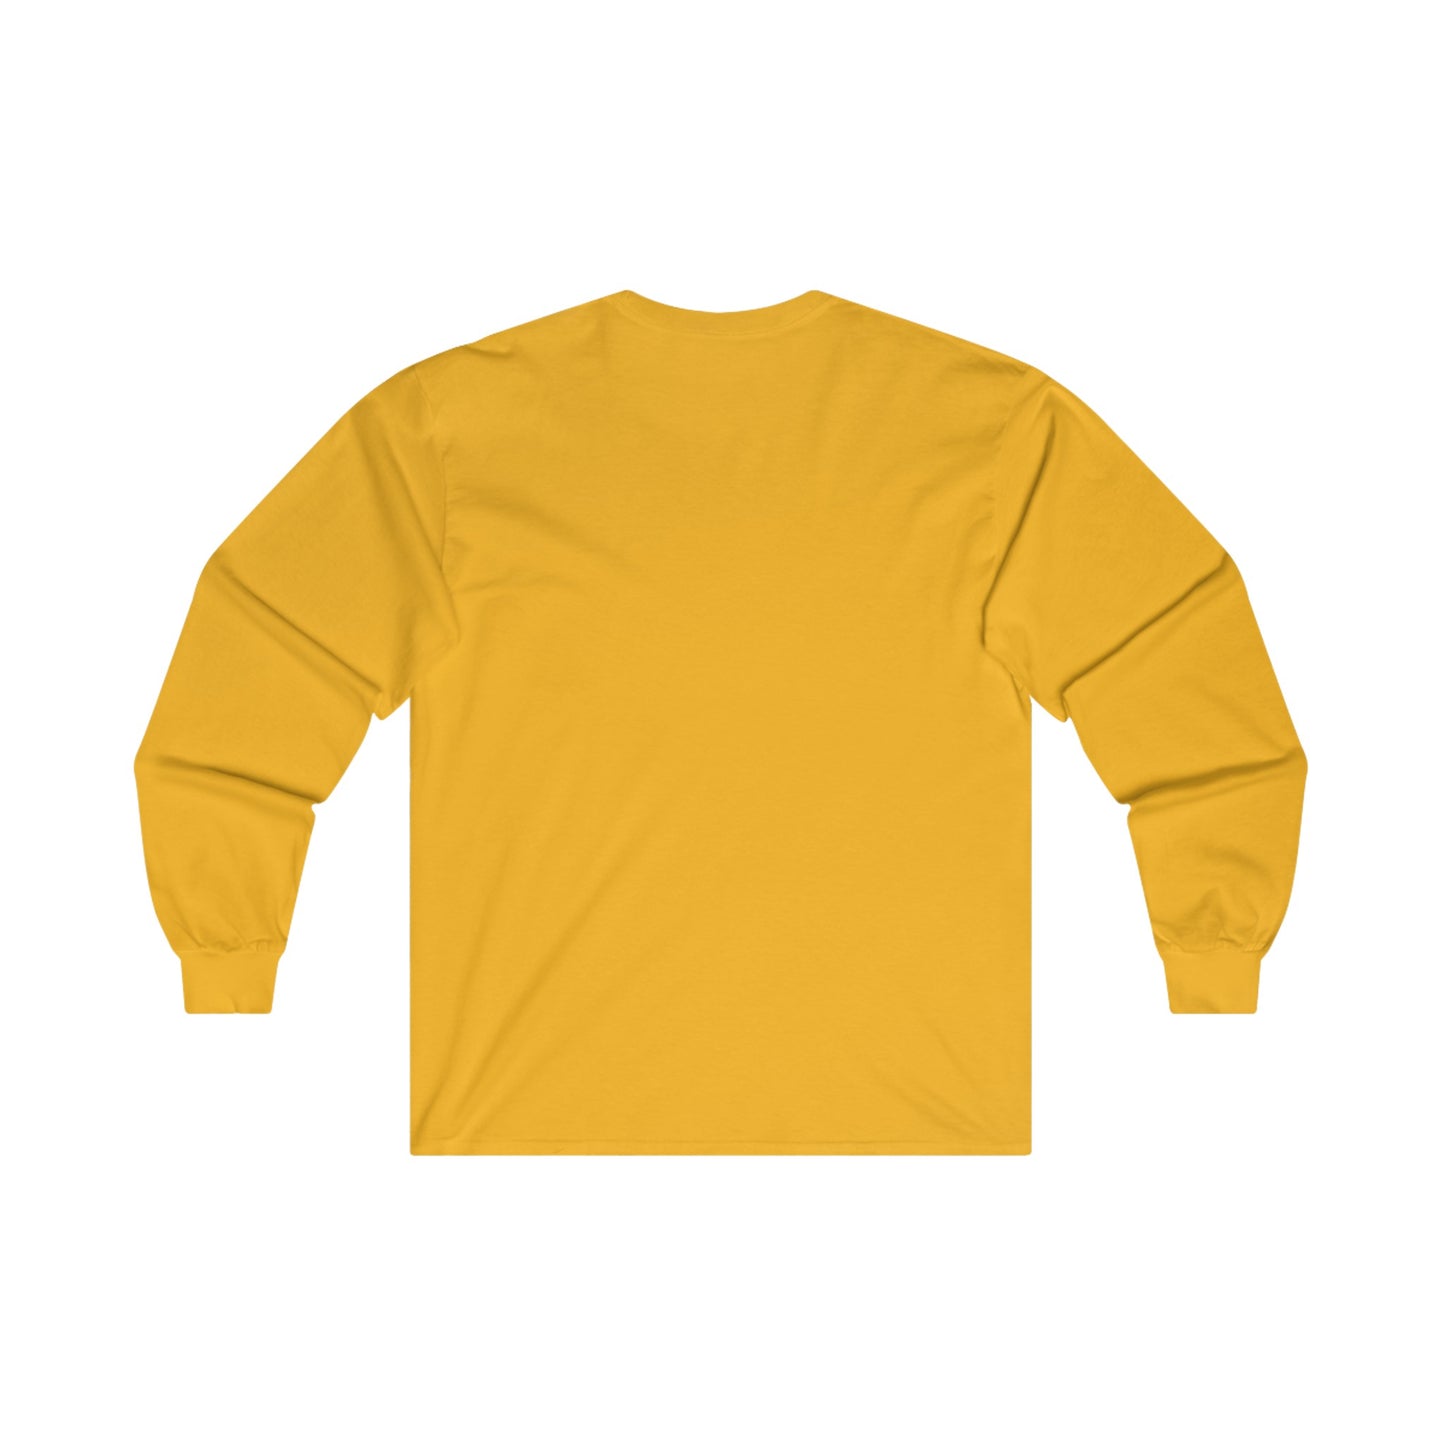 Team Bear - I Choose the Bear Unisex Ultra Cotton Long Sleeve Graphic Tee Shirt | 3 Colors | Hyperbole Design